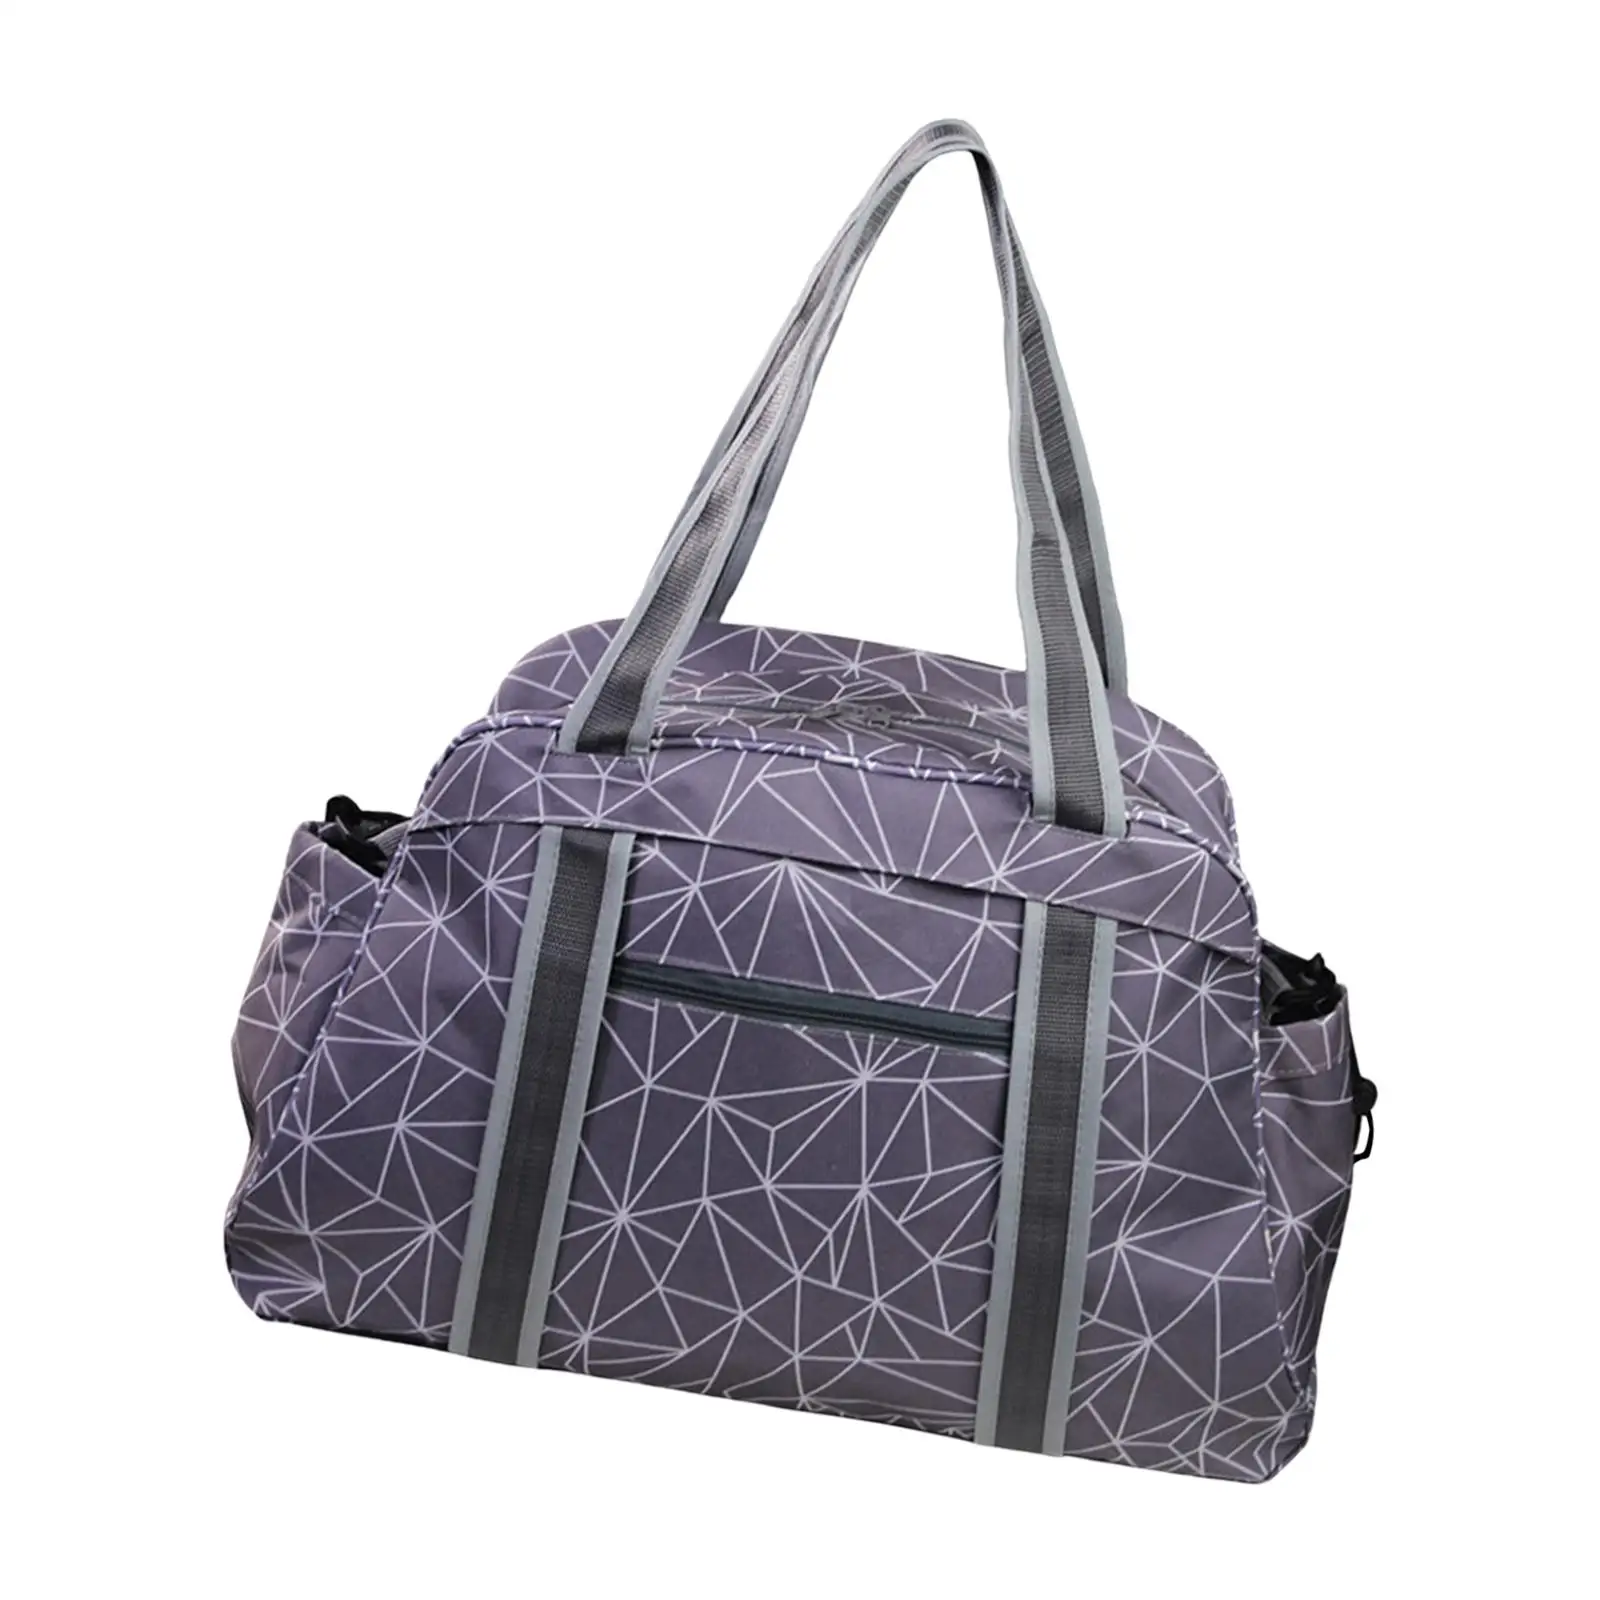 Sports Gym Bags Wear Resistant Weekender Bag Organizer Storage Tote Holdall Travel Duffle Bag for Golf Apparel Women Men